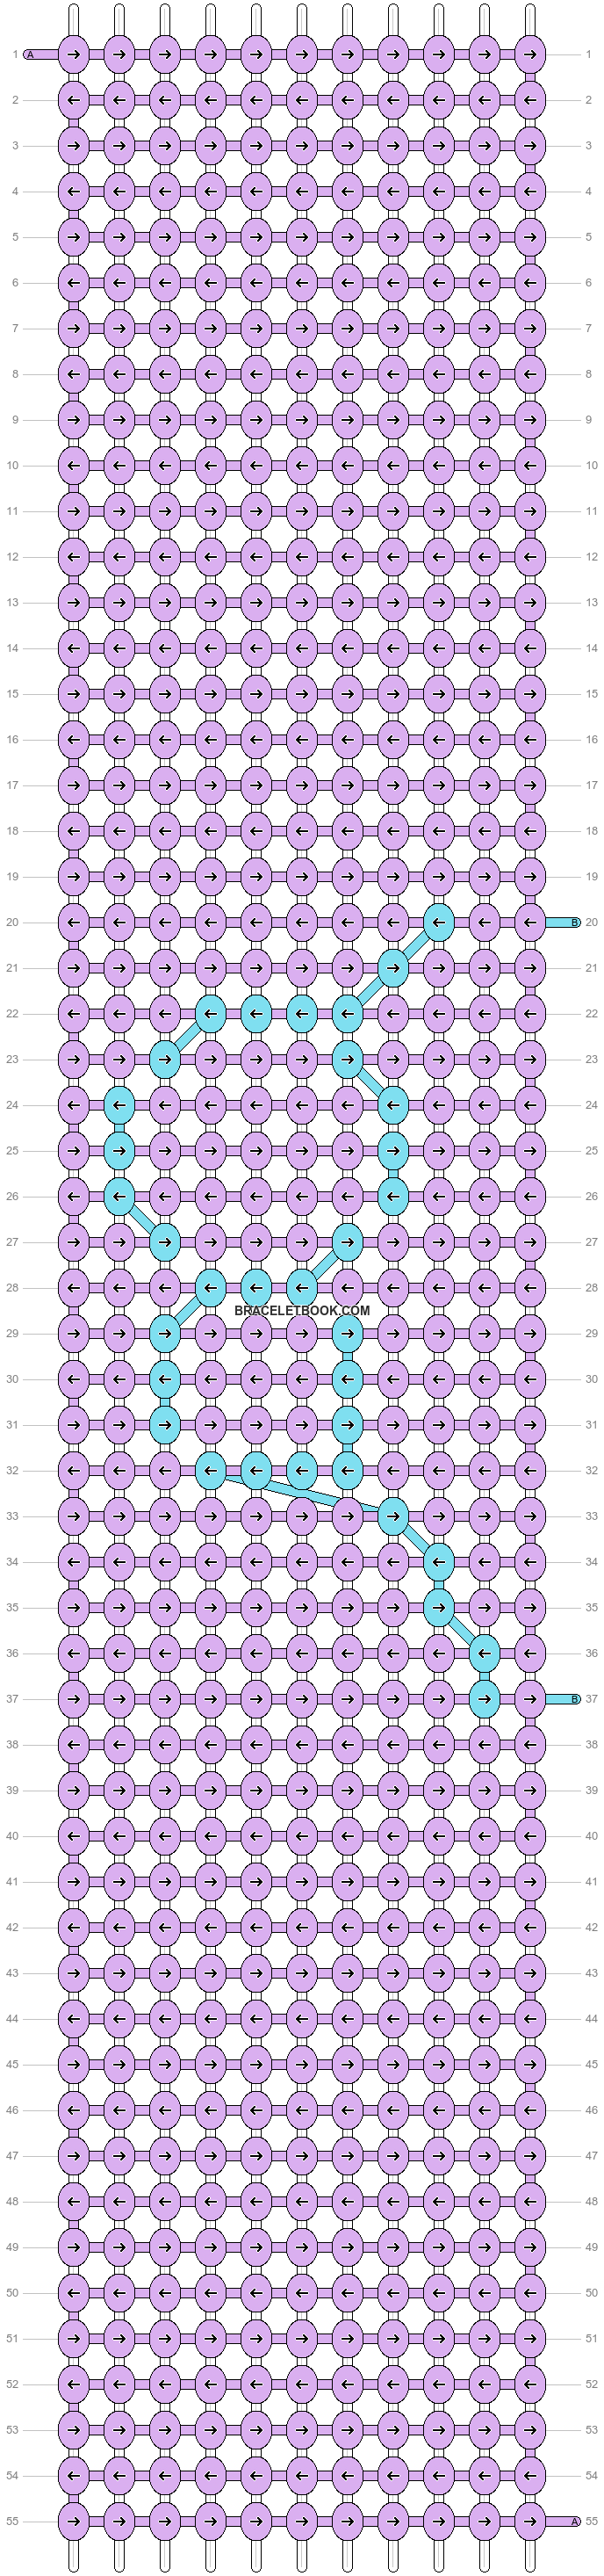 Alpha pattern #46134 variation #82115 pattern